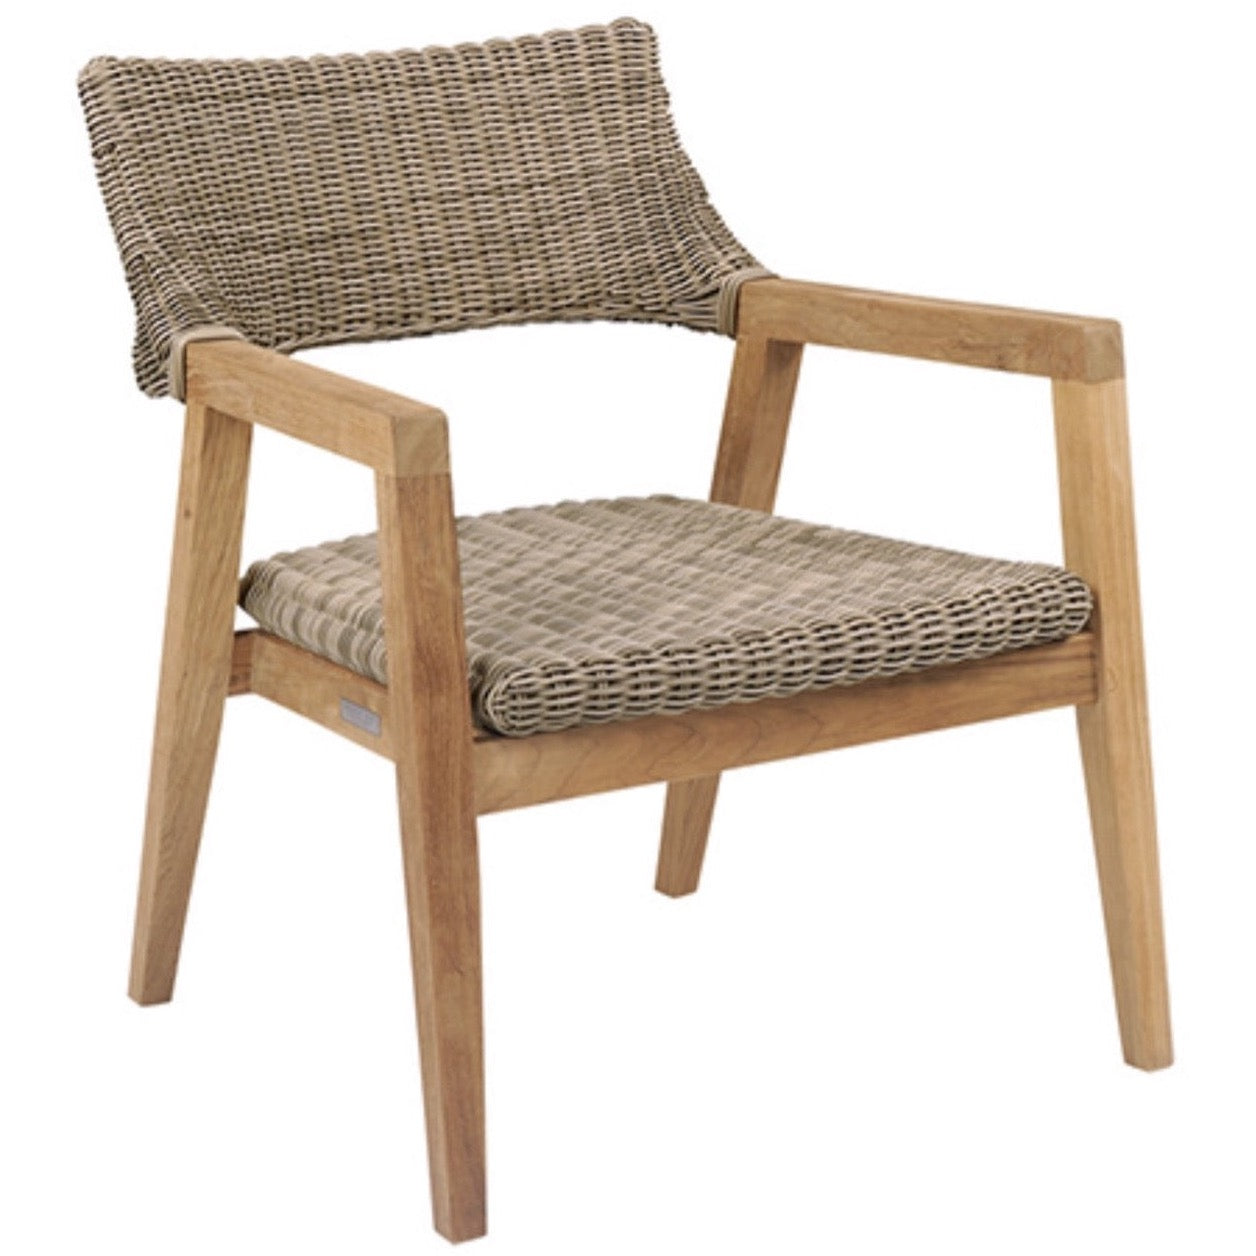 Spencer Club Chair-Teak/Willow